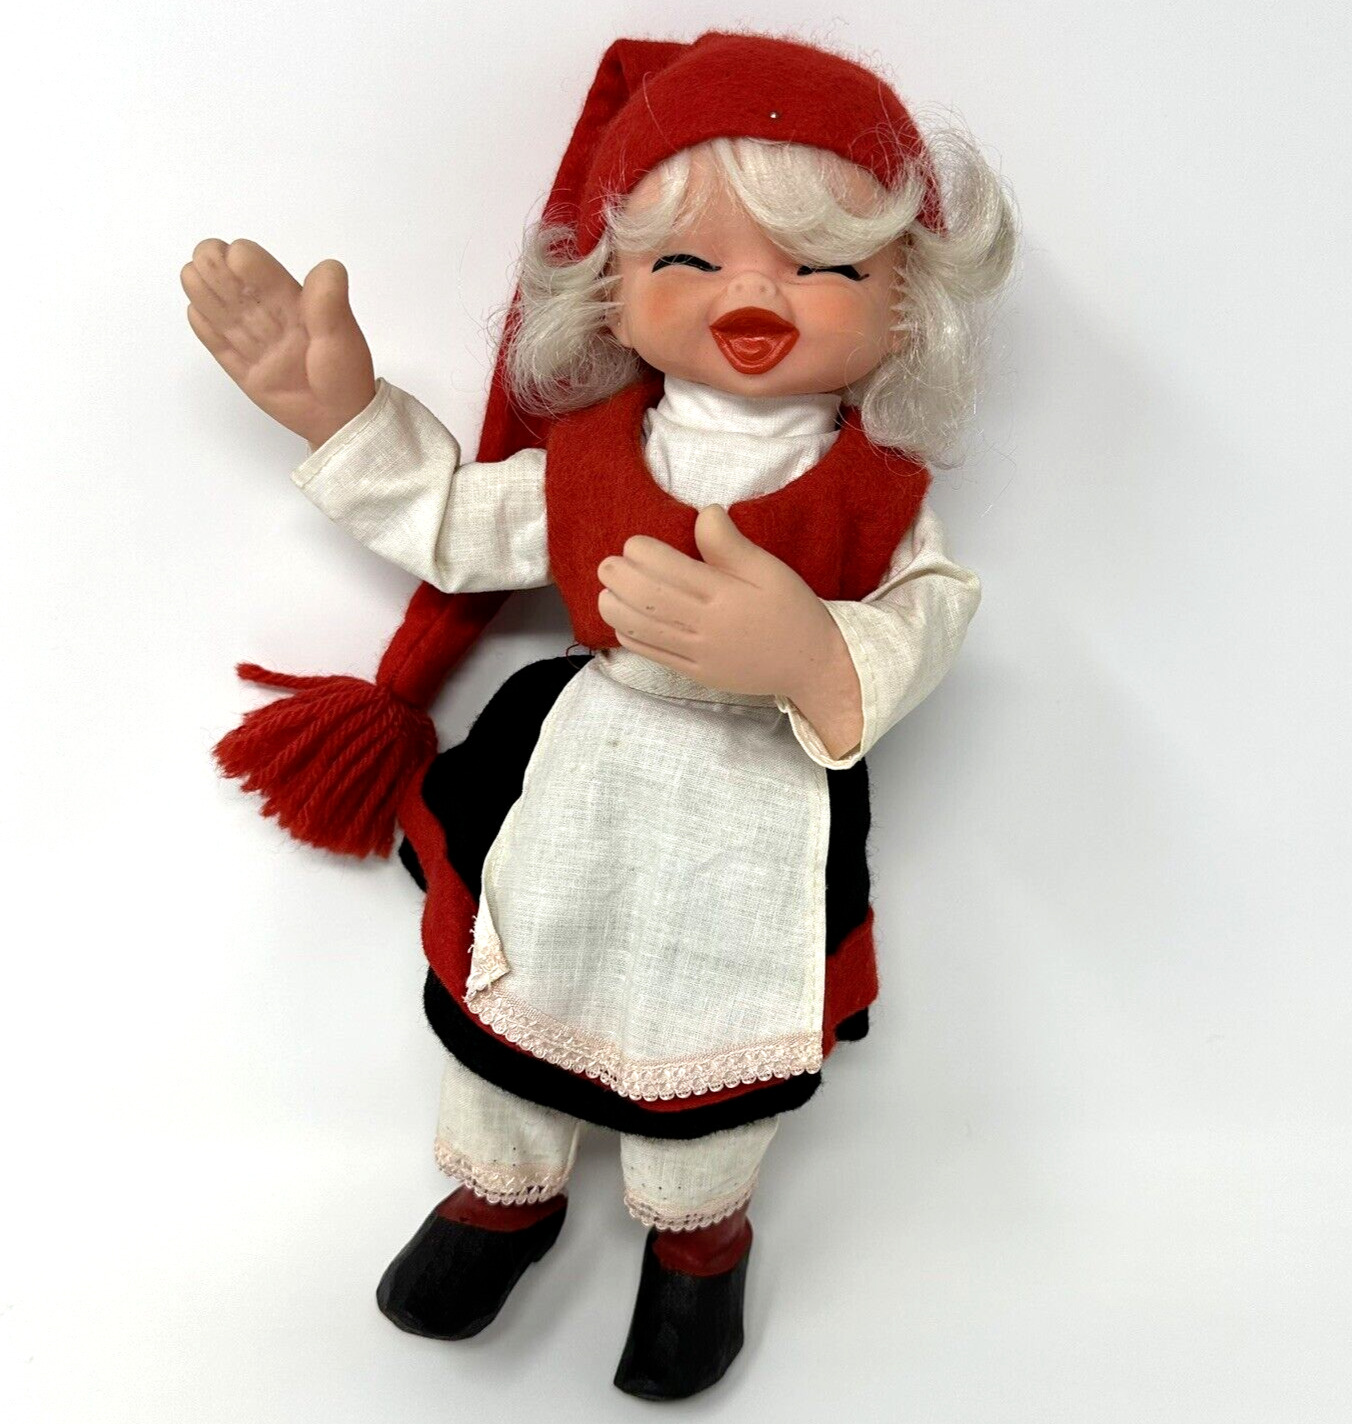 Arne Hasle Nisse Gnome Girl Woman Red Cap Dress Norwegian Elf Doll Christmas 11